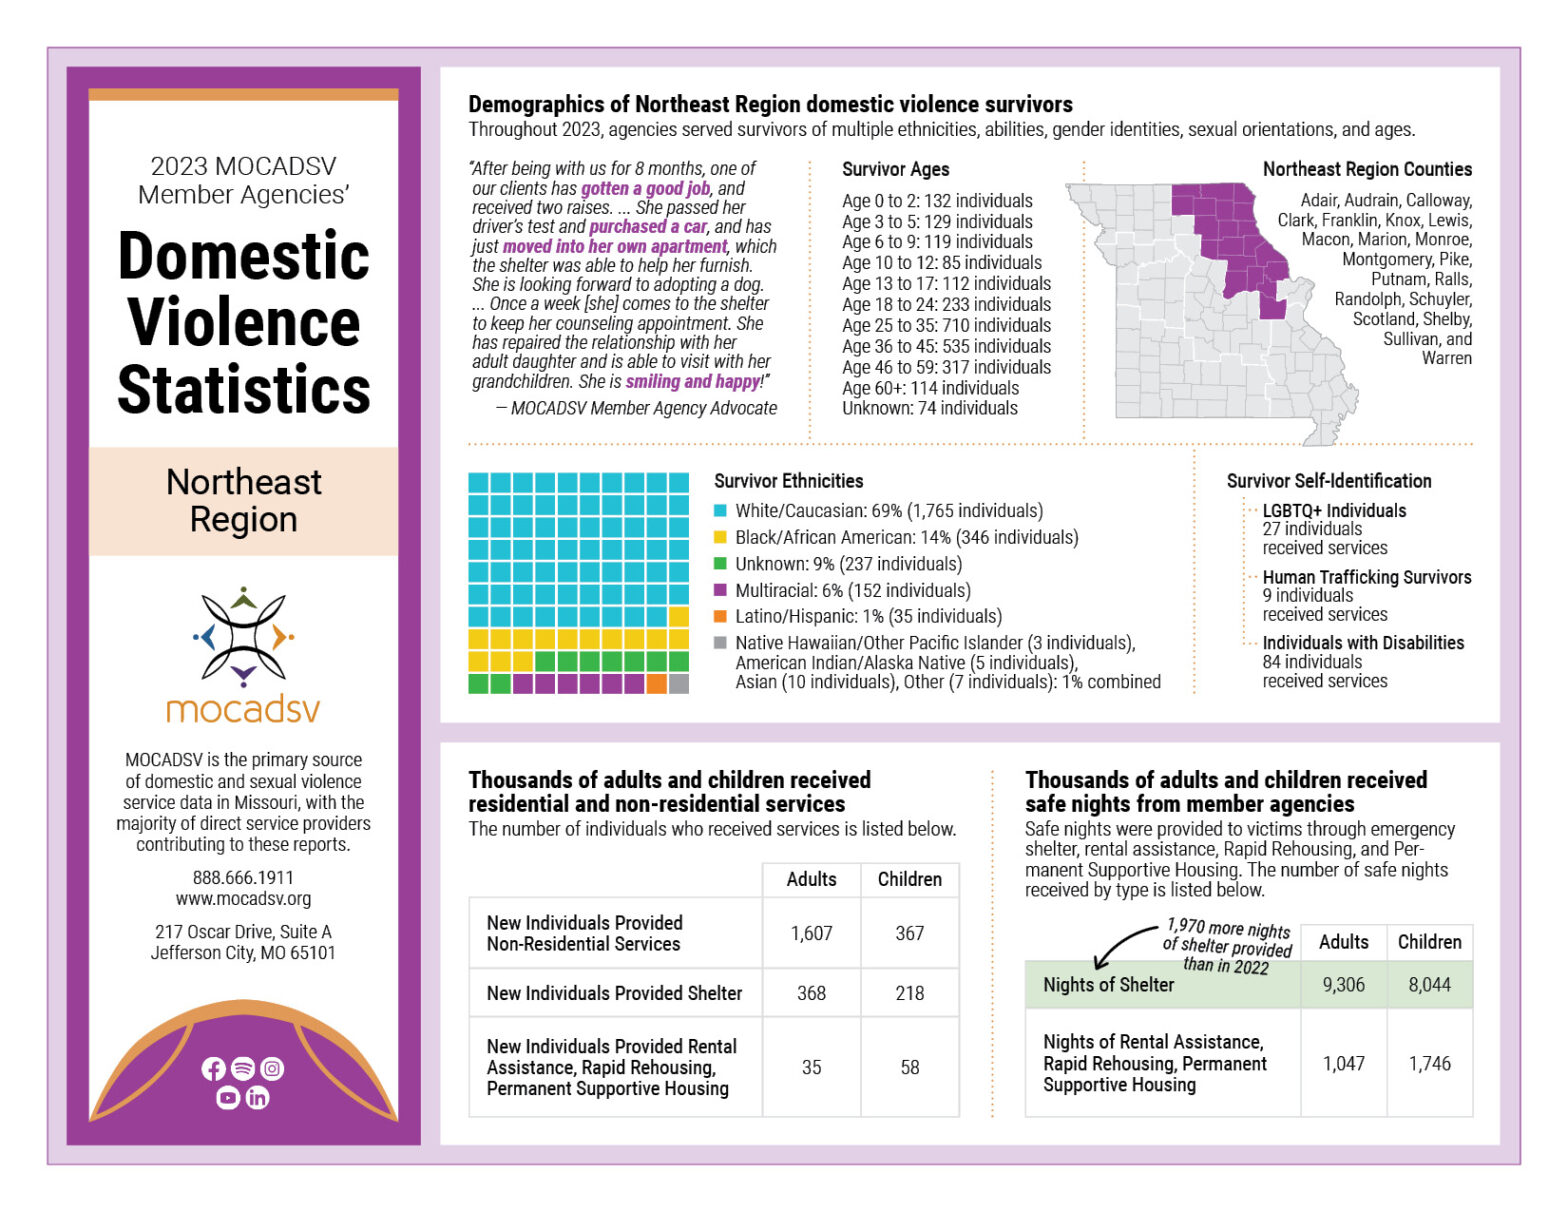 2023 Northeast Region Domestic Violence Stat Sheet